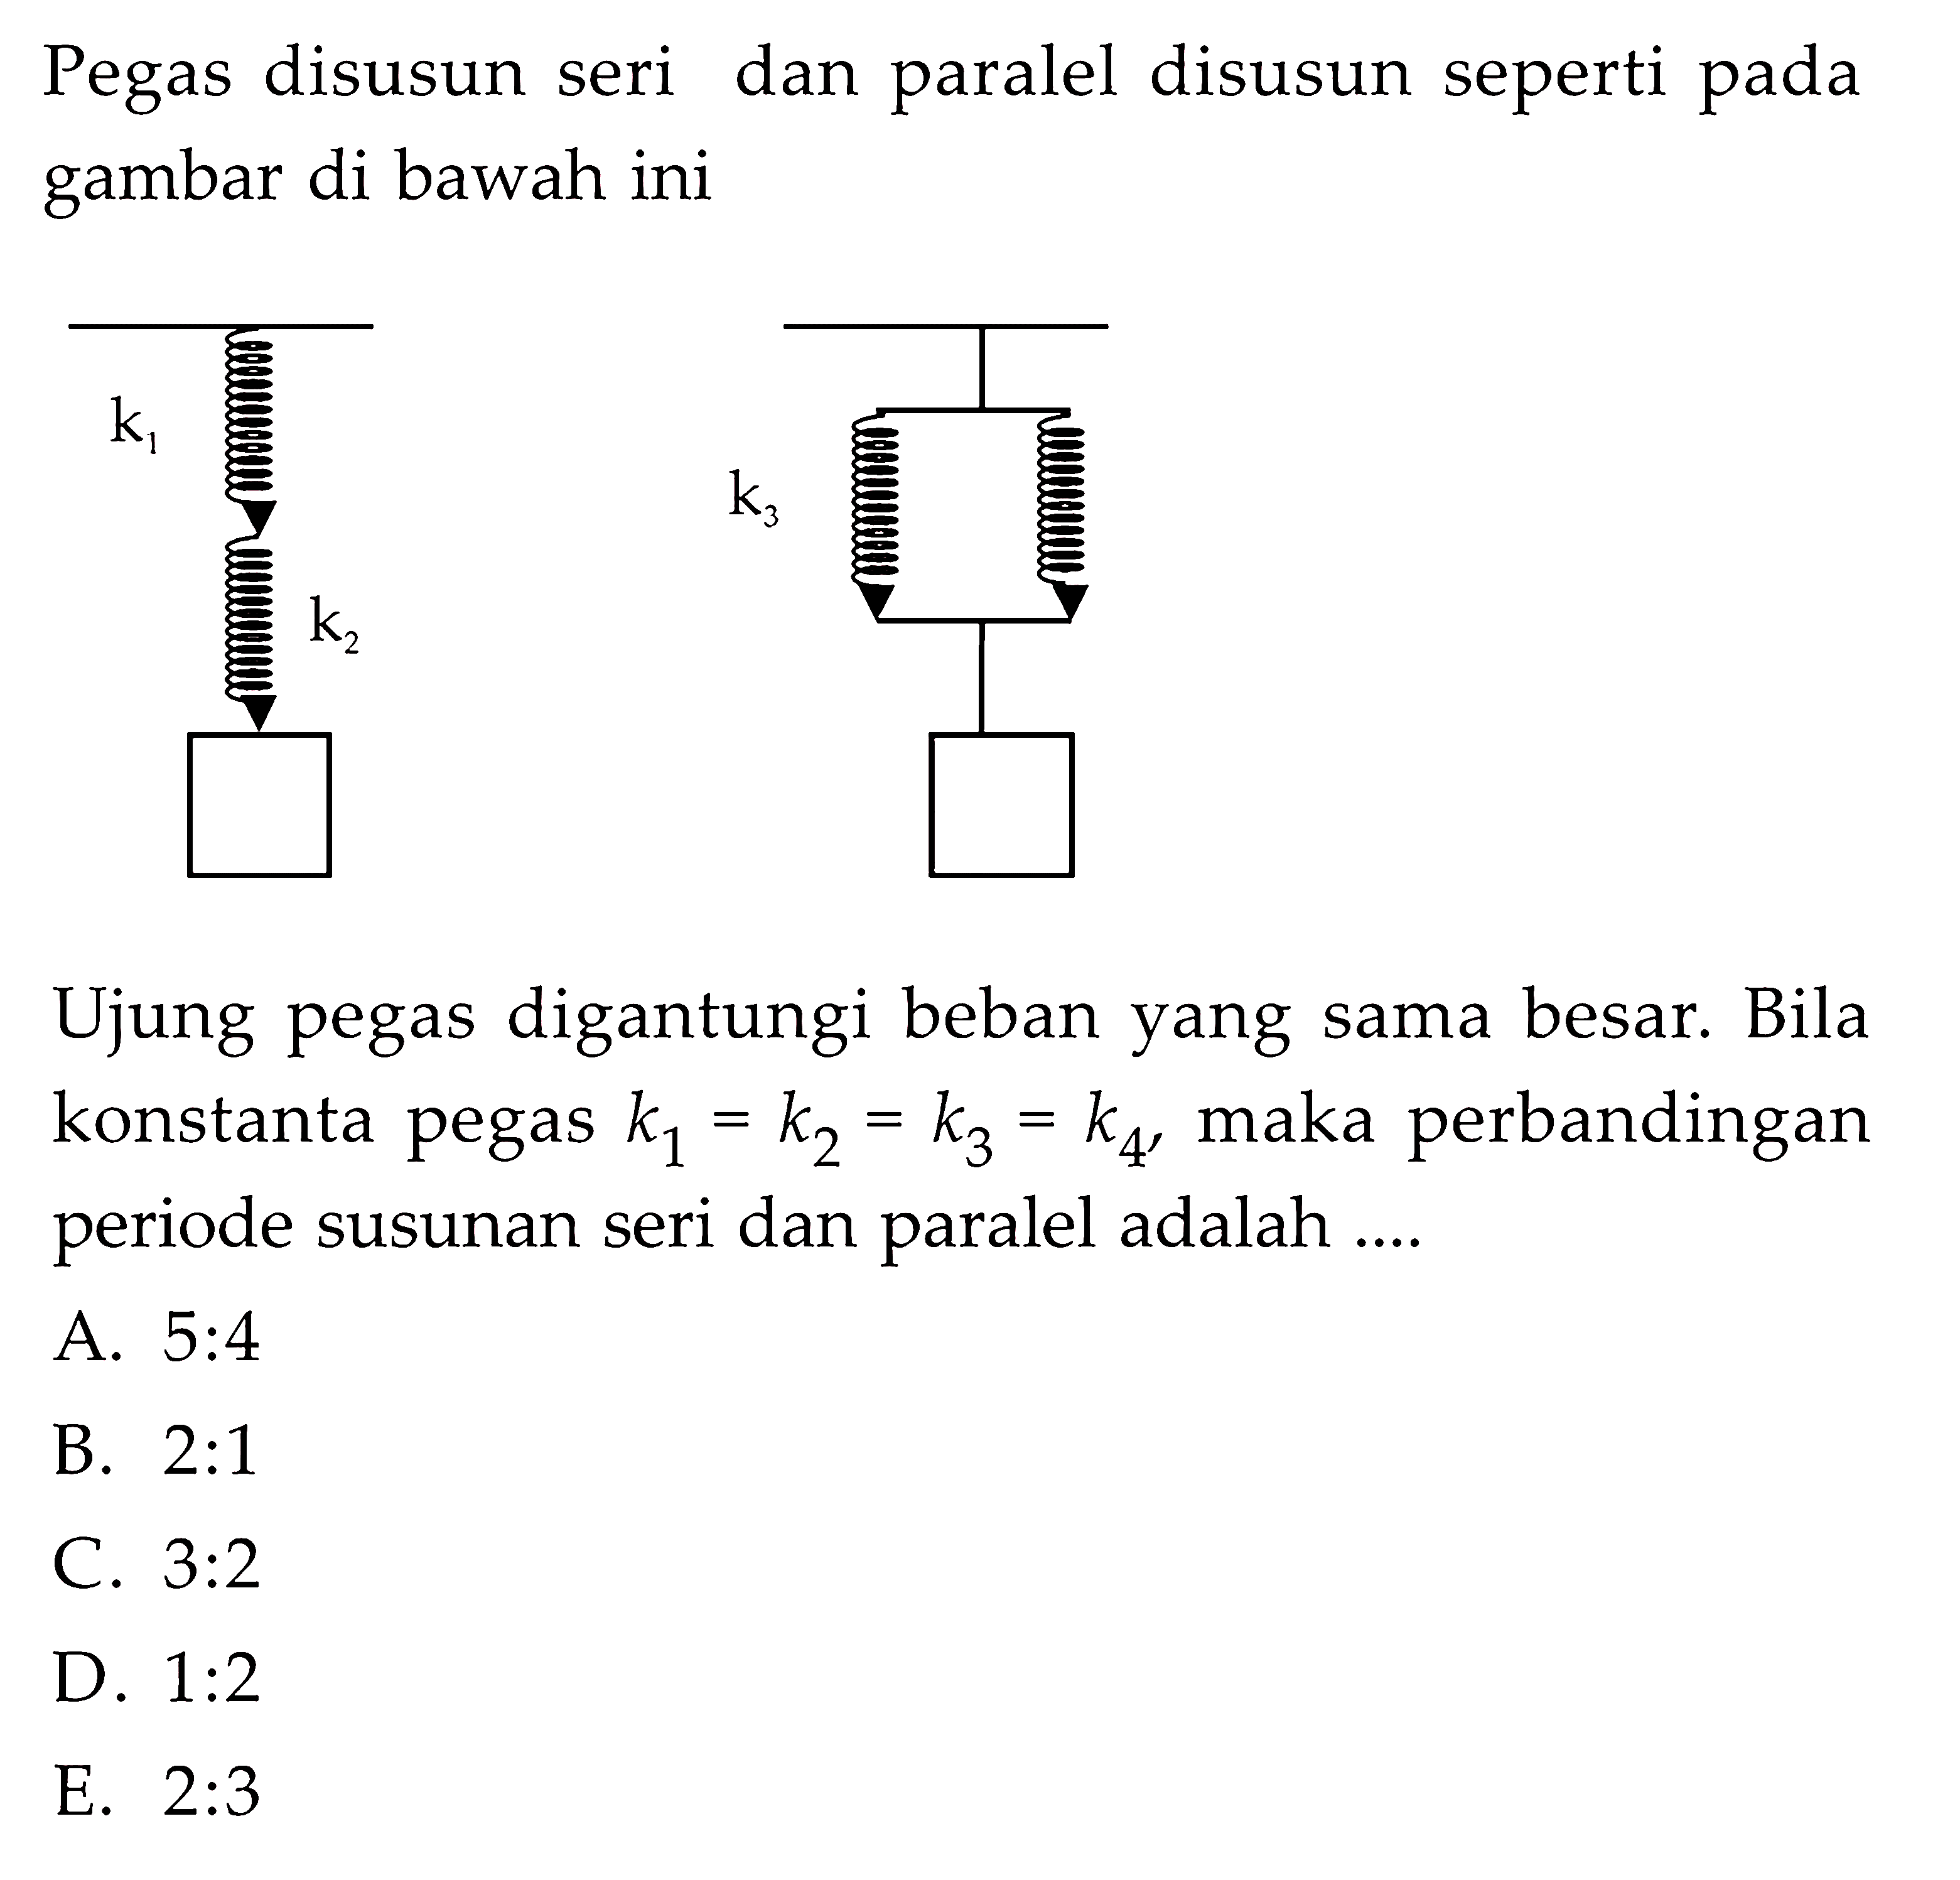 Pegas disusun seri dan paralel disusun seperti pada gambar di bawah ini k1 k3 k2 Ujung pegas digantungi beban yang sama besar. Bila konstanta pegas k1 = k2 = k3 = k, maka perbandingan periode susunan seri dan paralel adalah ....